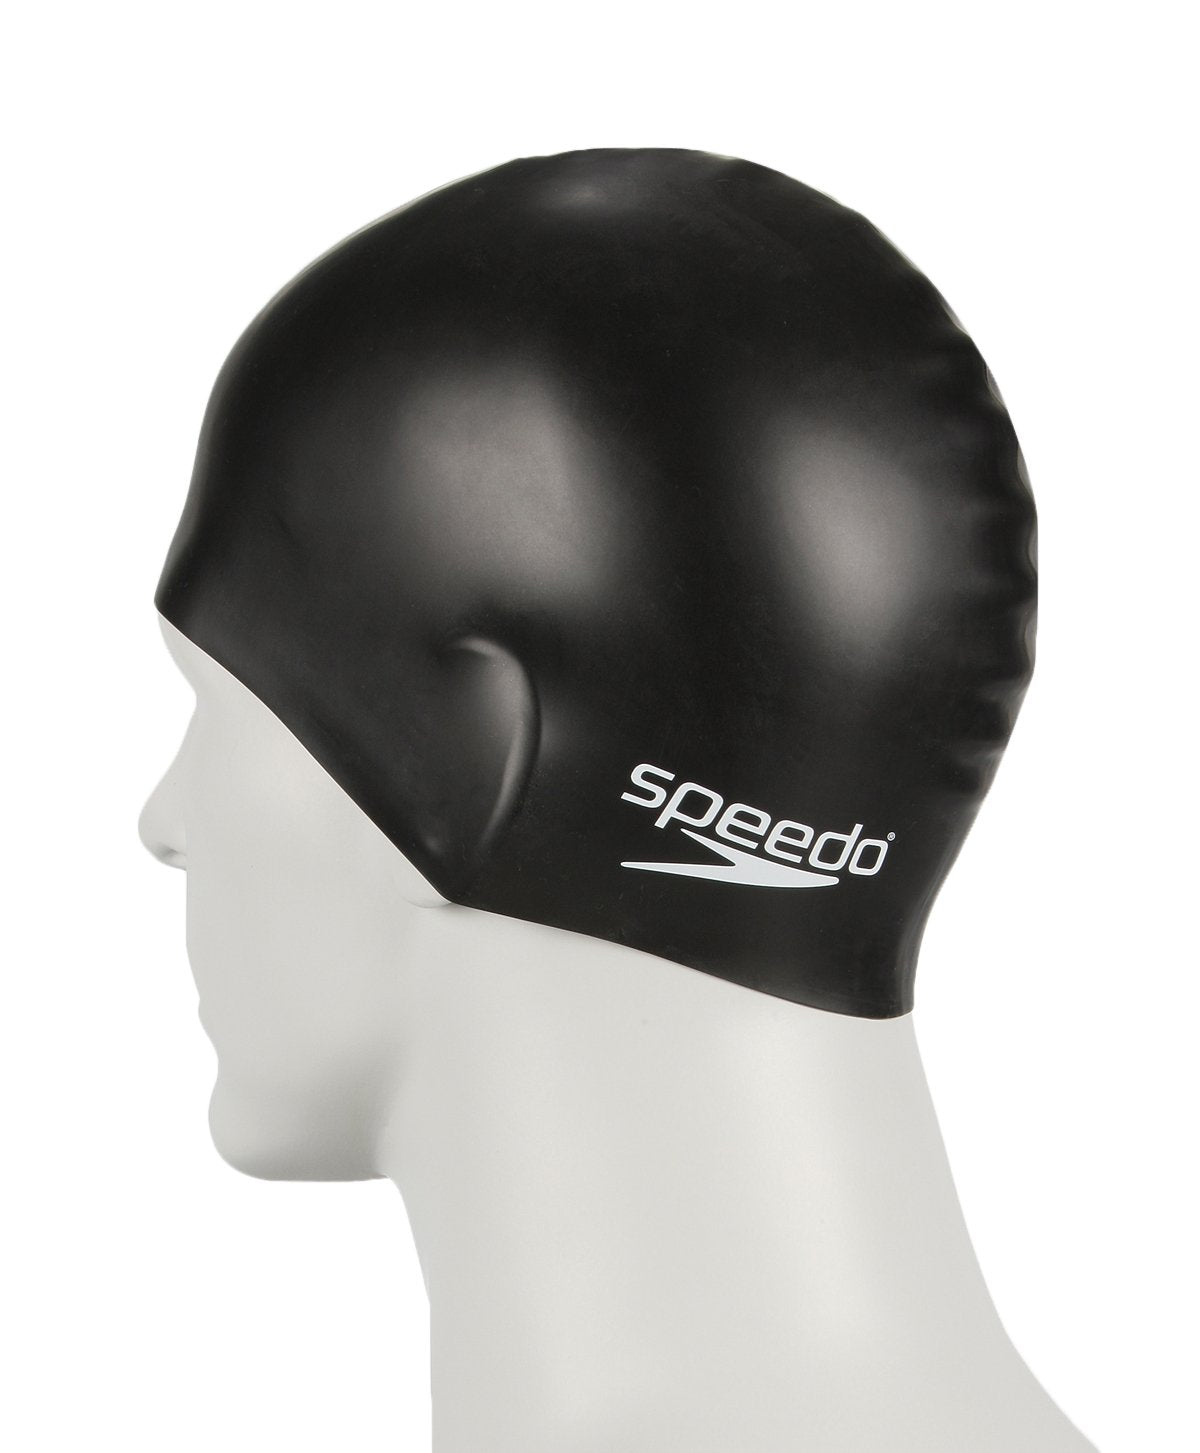 Speedo Unisex-Junior Plain Moulded Silicone Swimcap (Black) - Best Price online Prokicksports.com